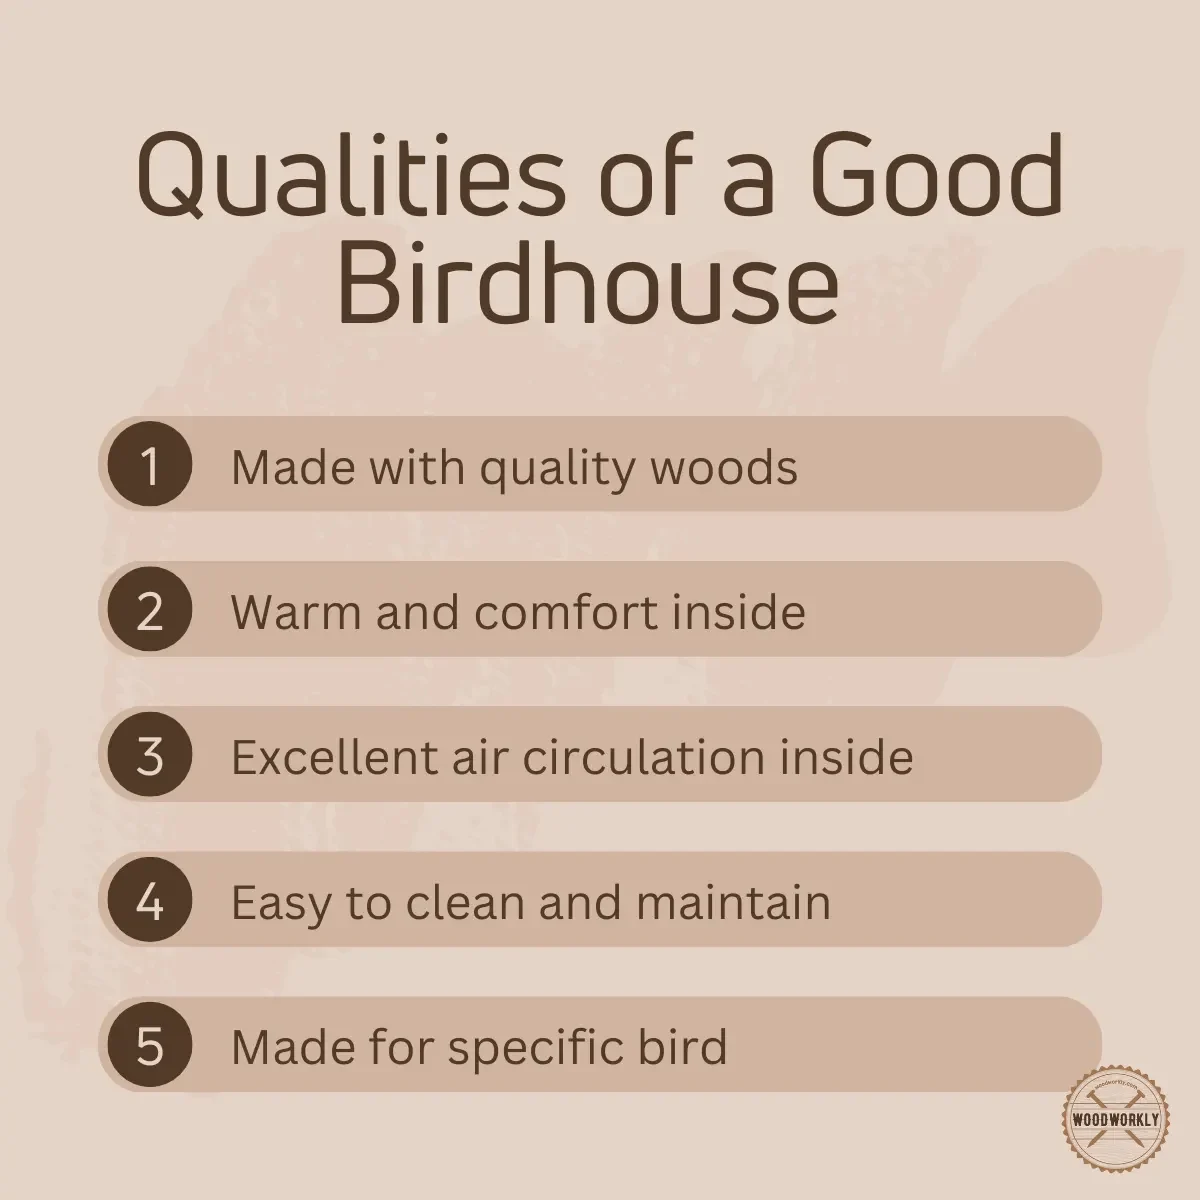 Qualities of a Good Birdhouse